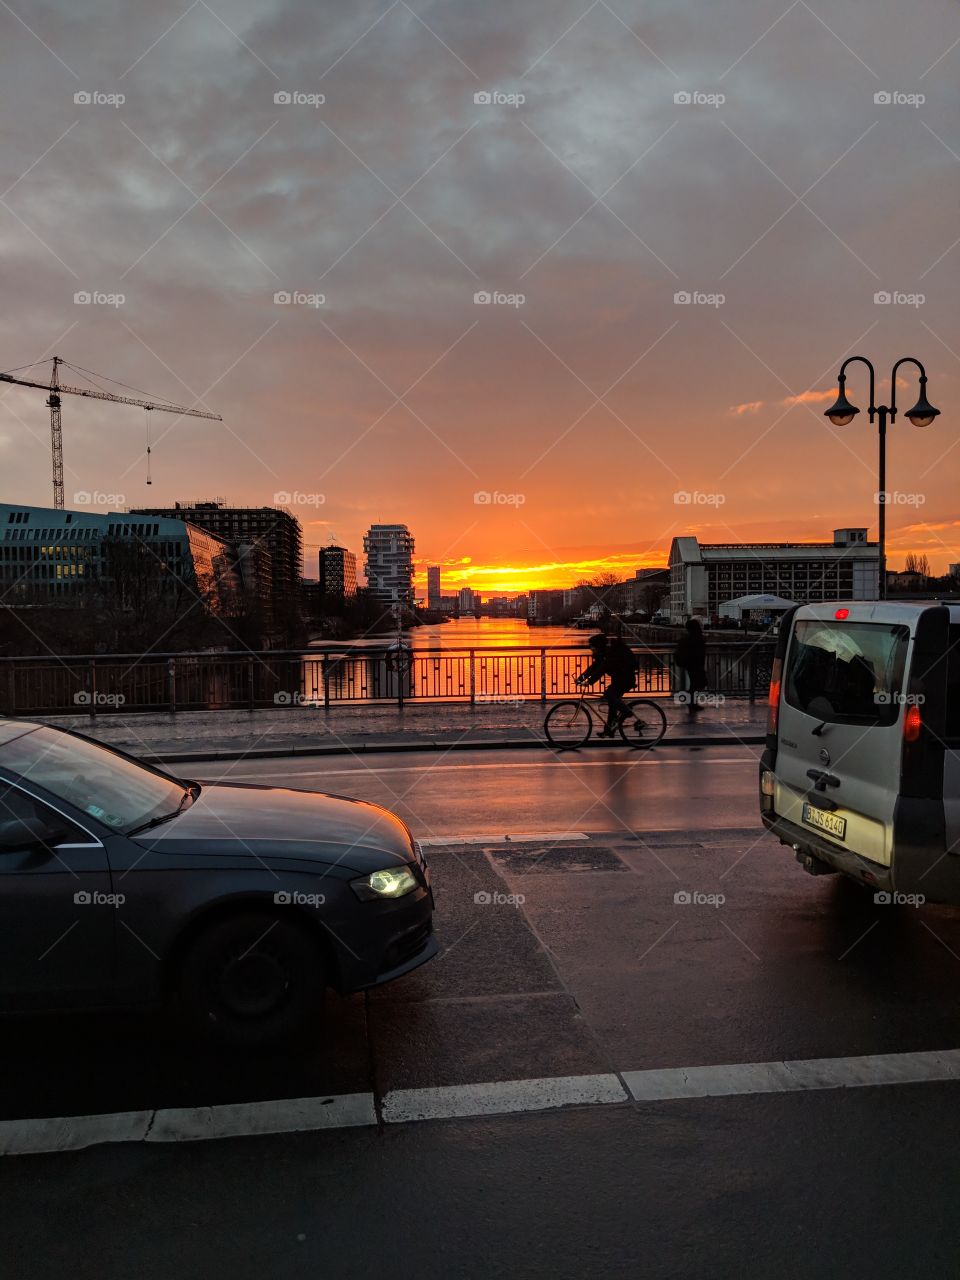 Berlin sunrise